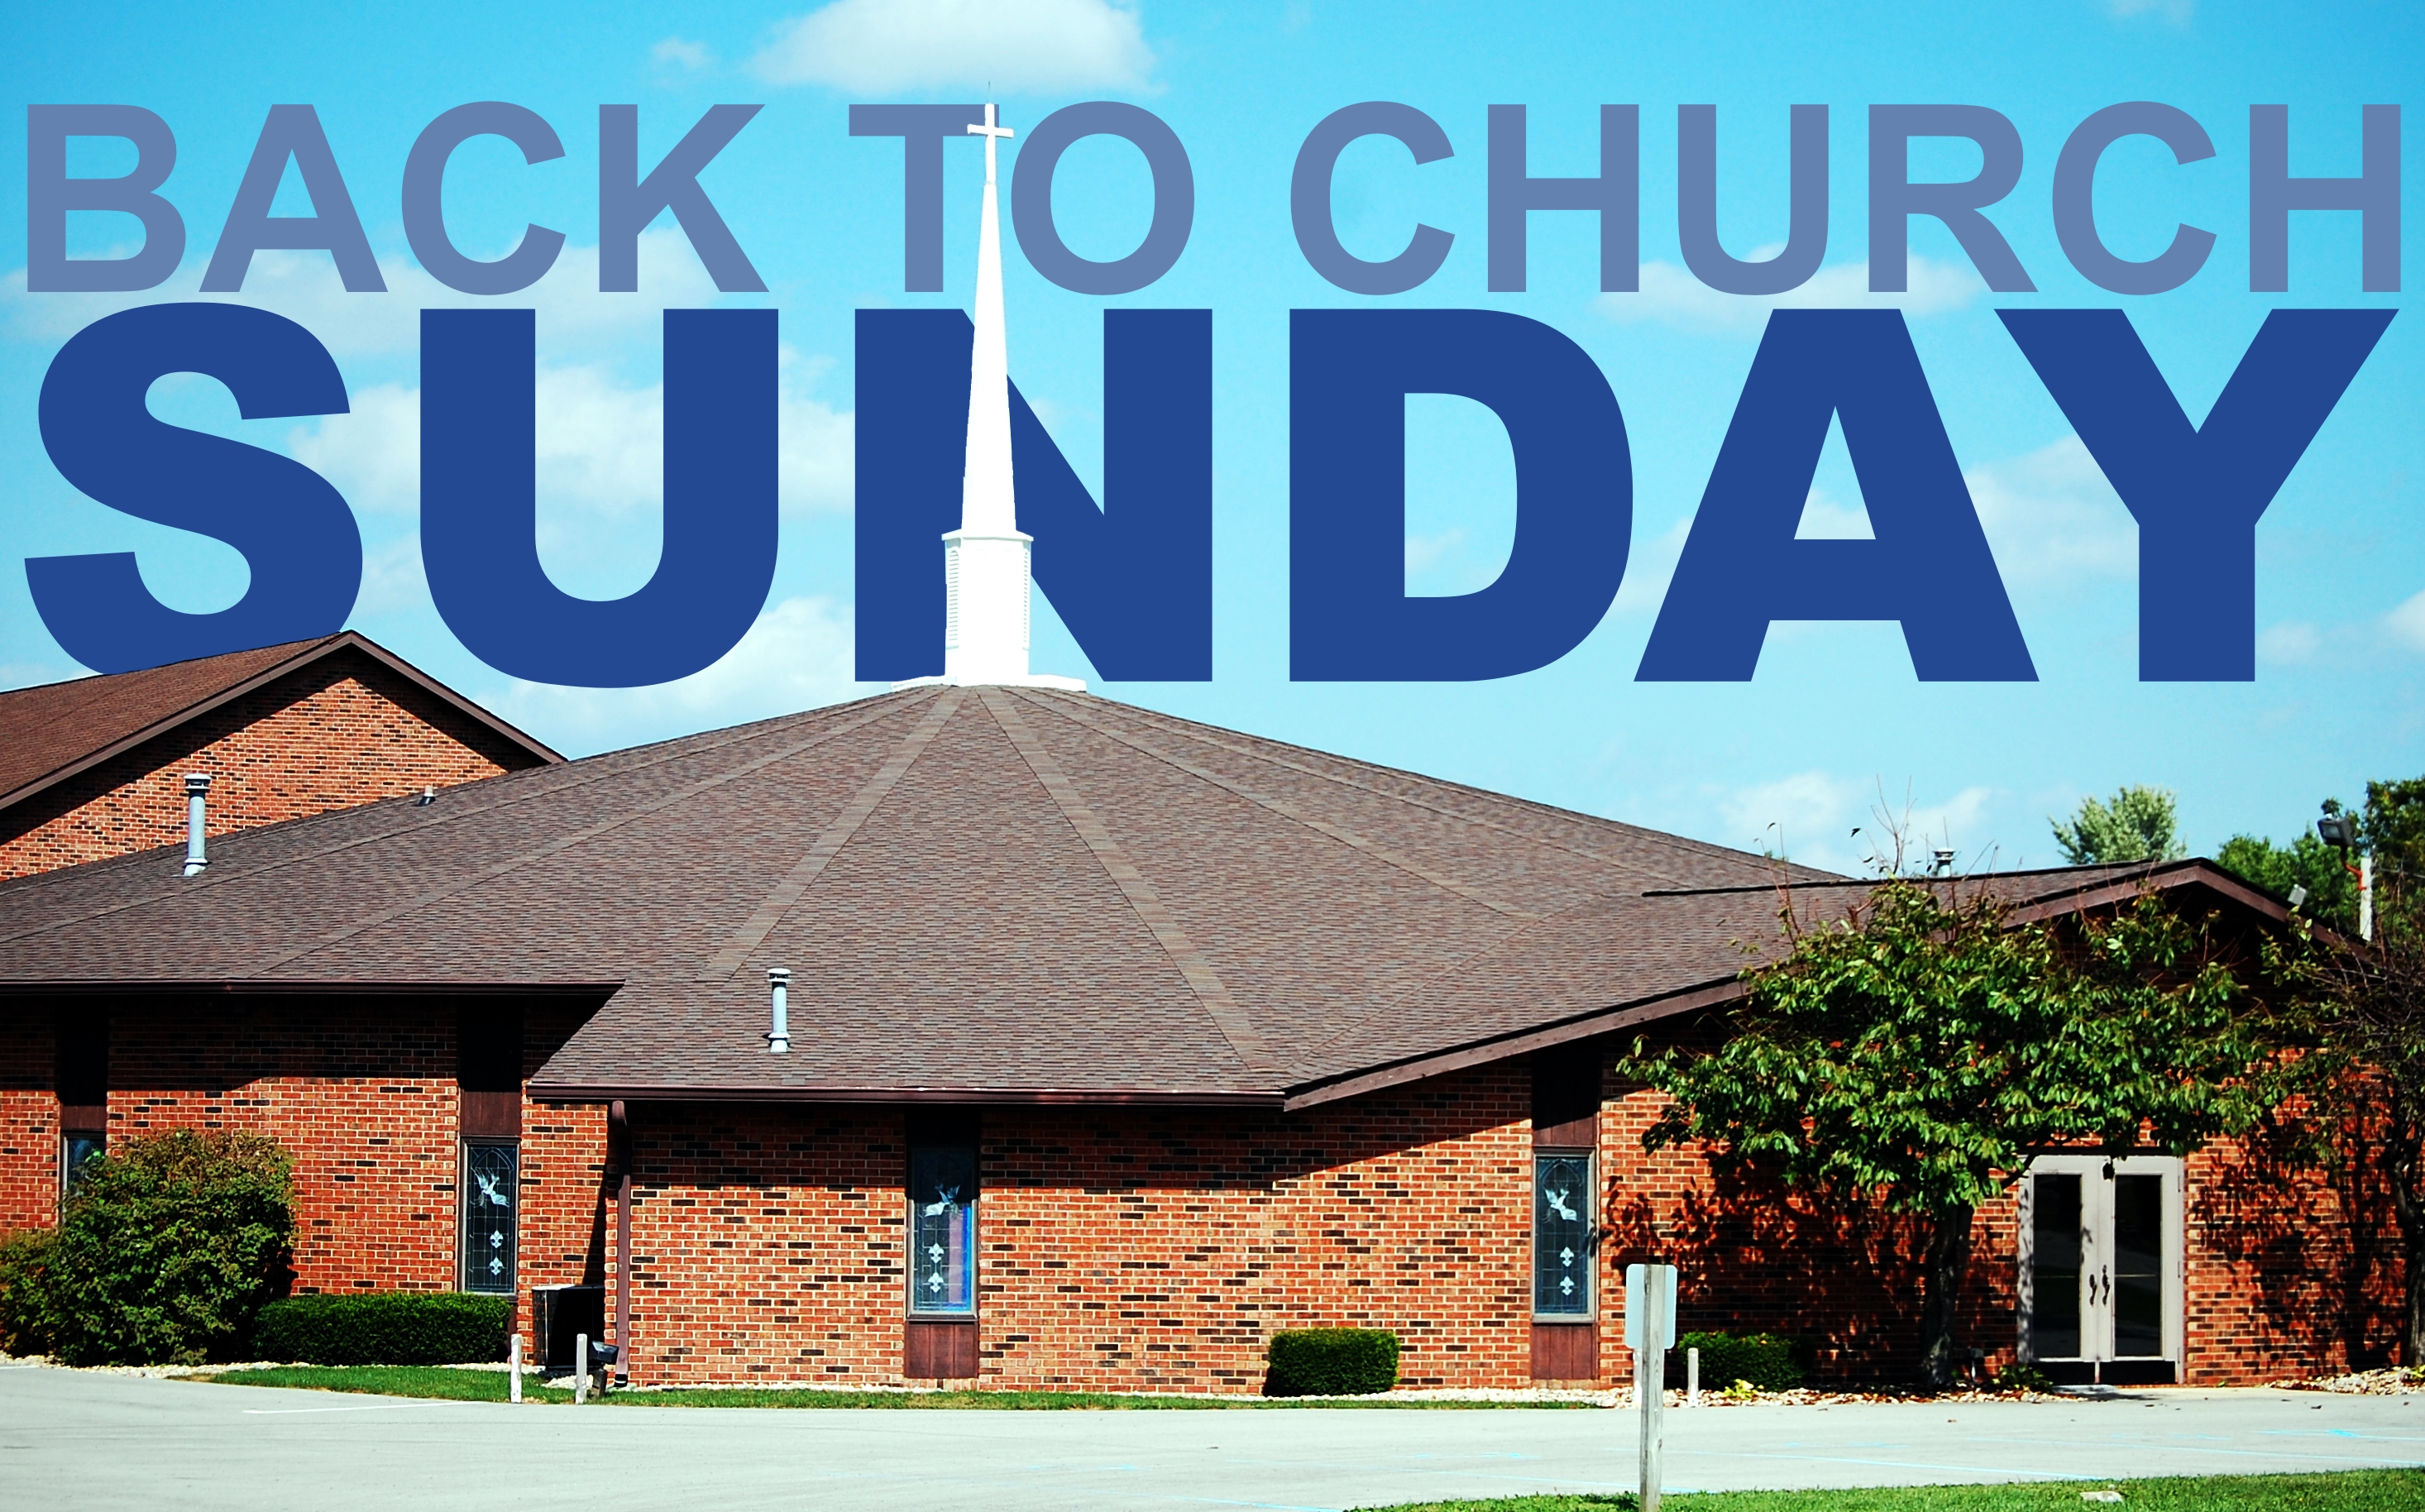 Back to Church Sunday - September 15, 2013